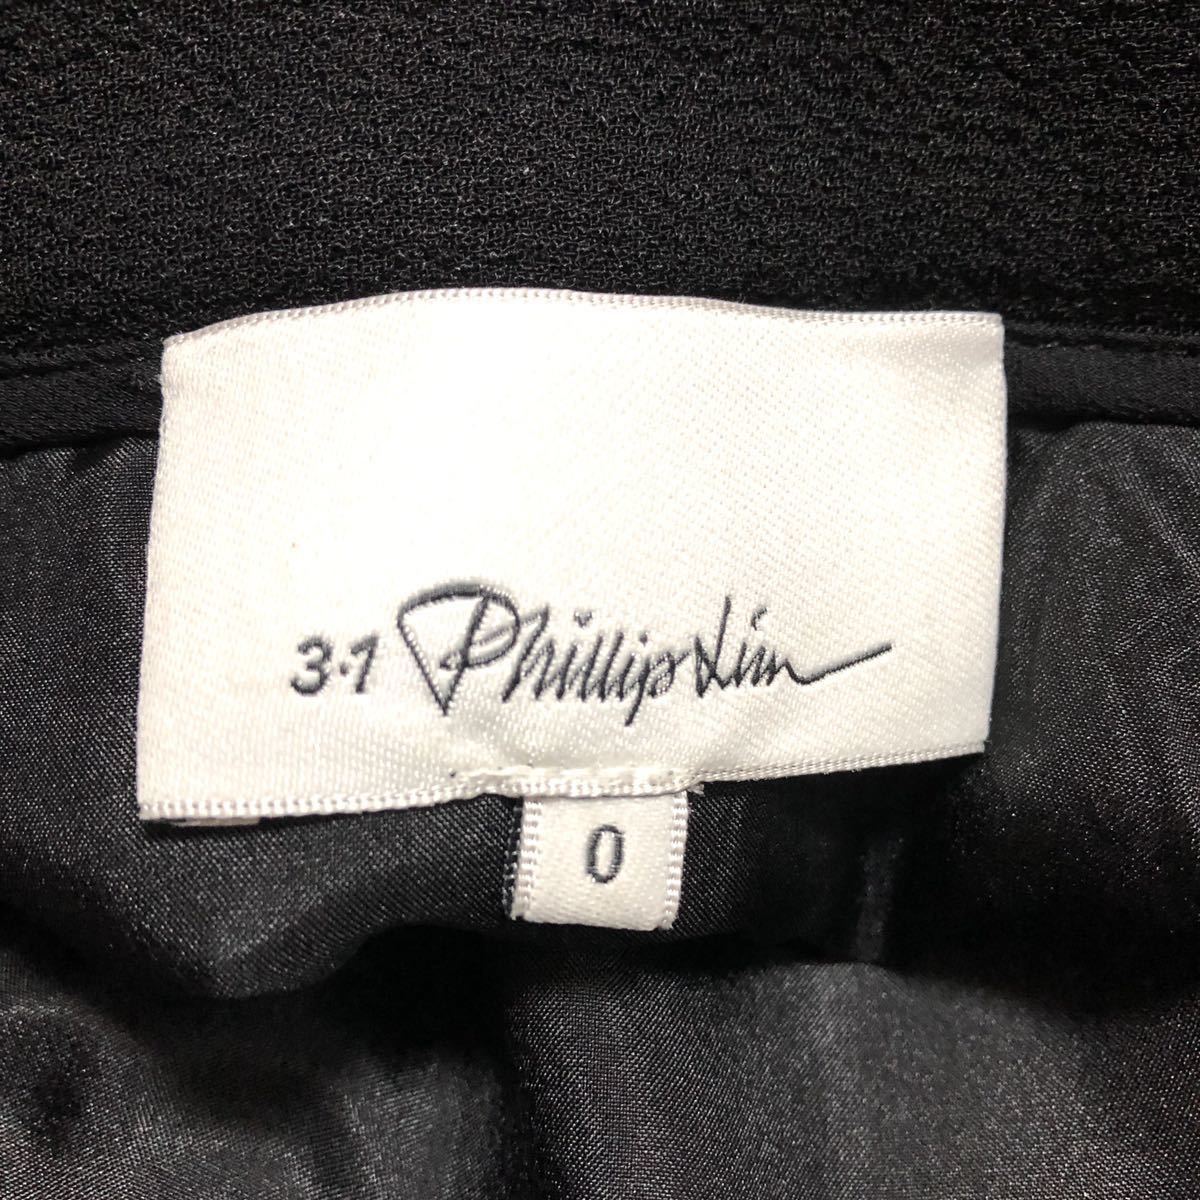  Philip обод 3.1 phillip lim юбка чёрный 